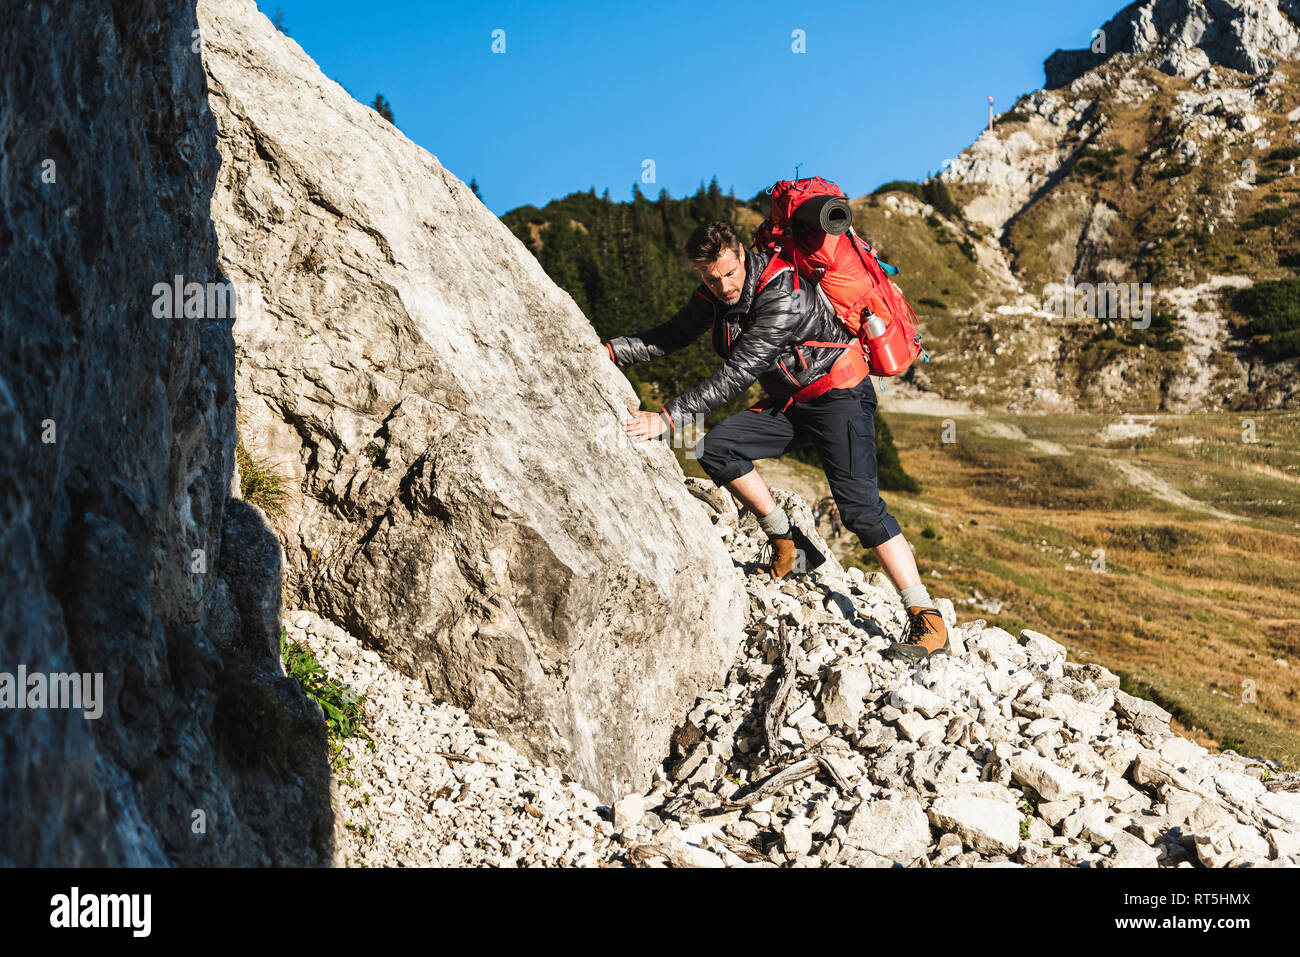 Couple mountain hiking in rocky terrain Stock Photo